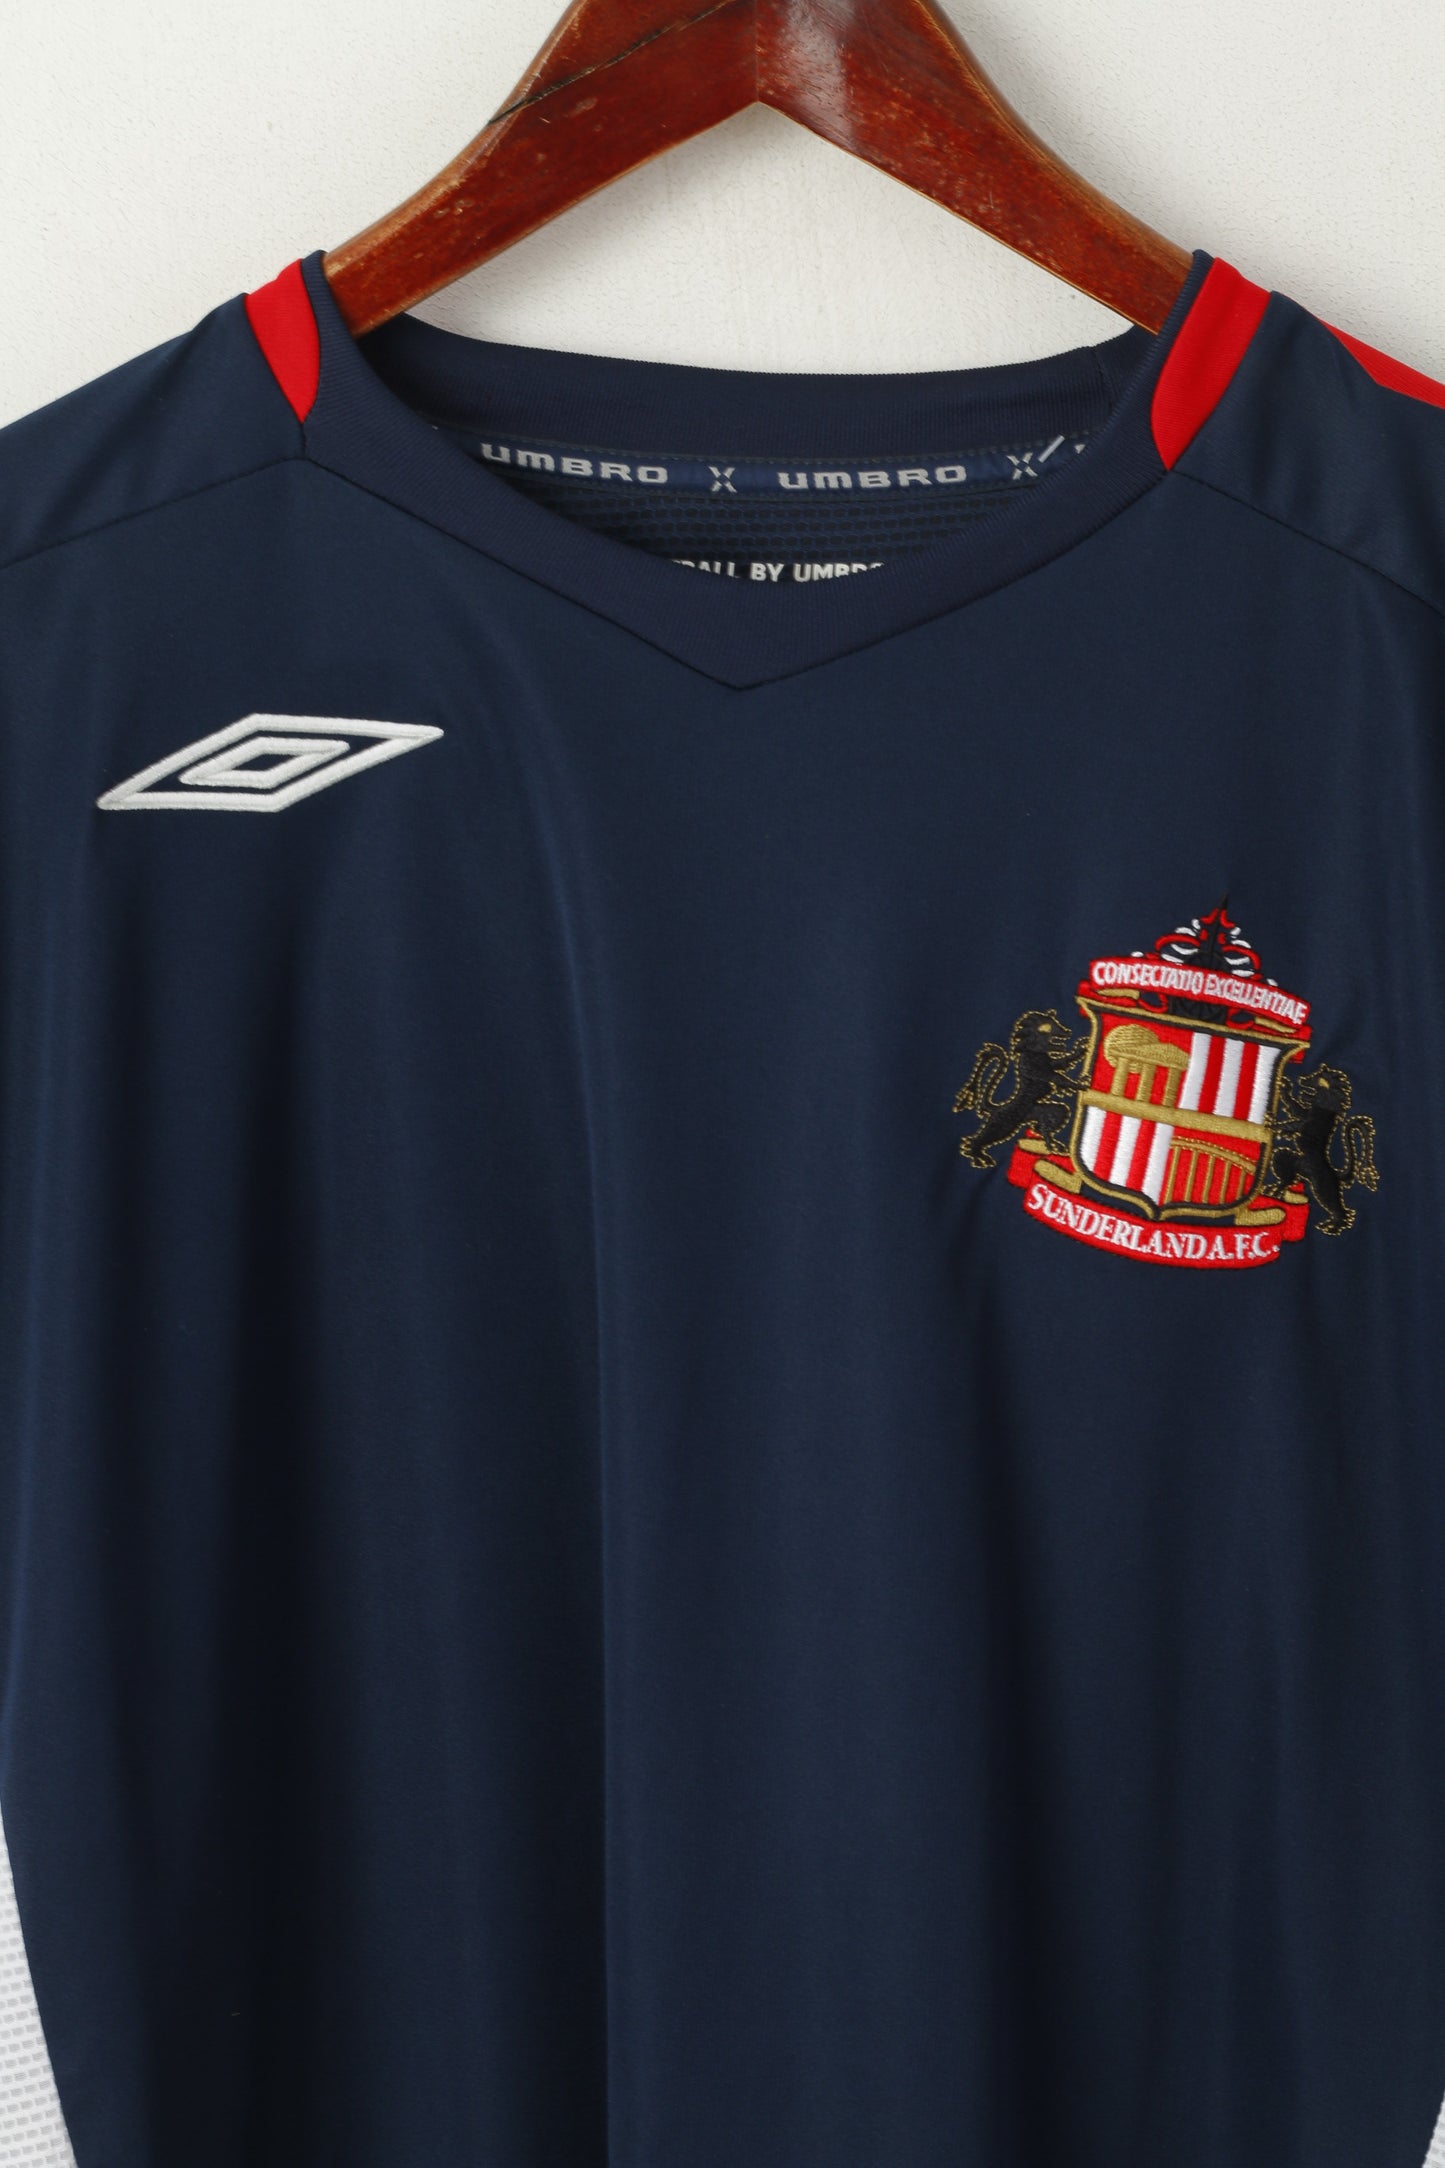 Umbro Men XXL Shirt Navy Sunderland Football Club Jersey Sportswear Top